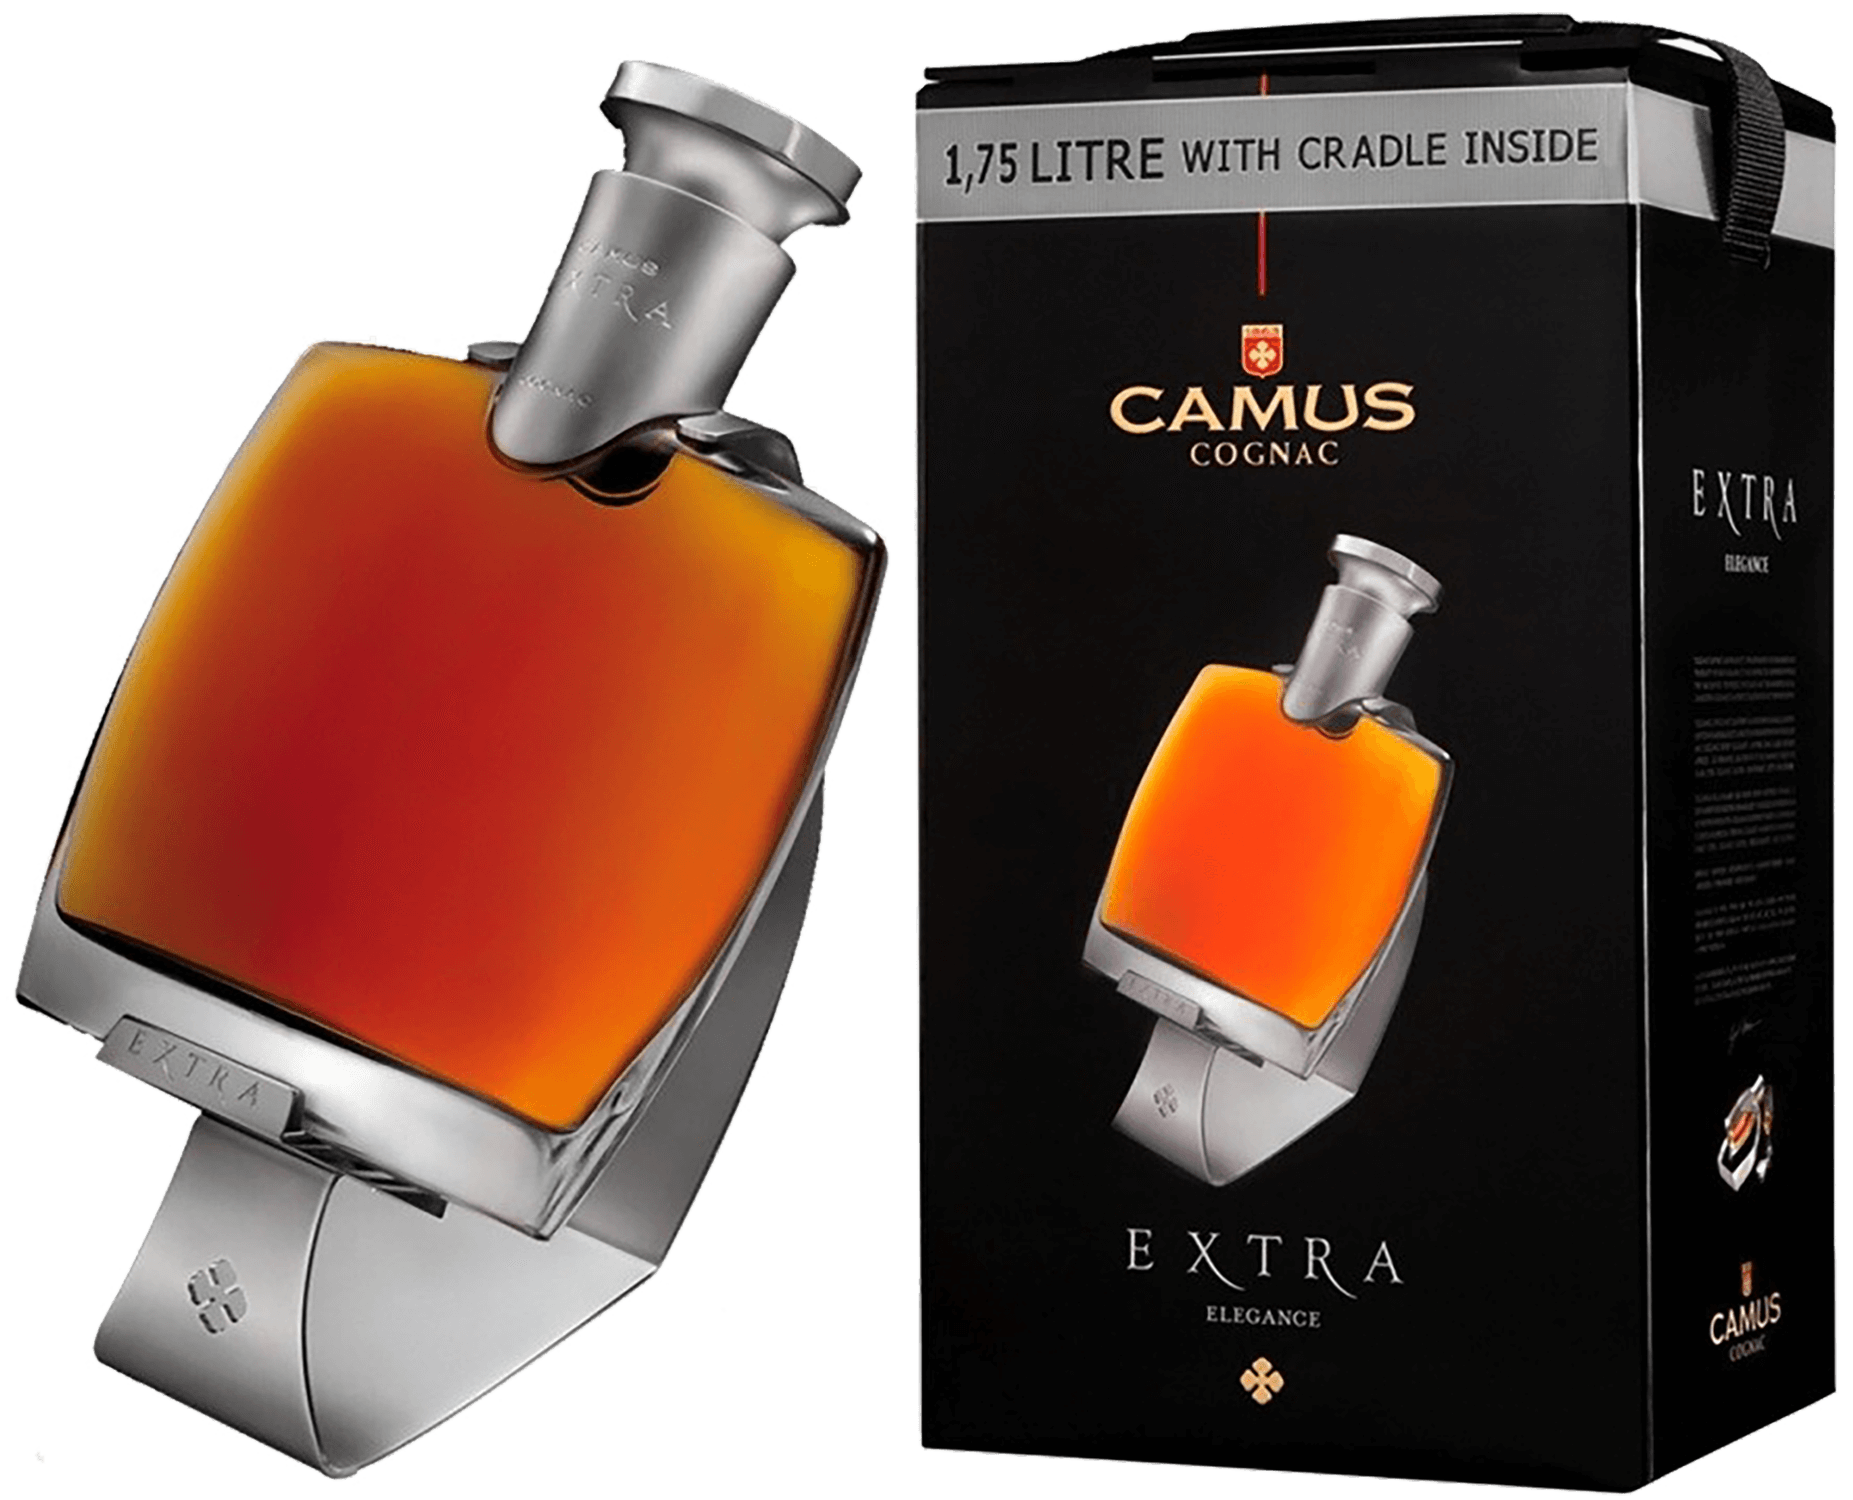 Camus Elegance Cognac Extra (gift box)